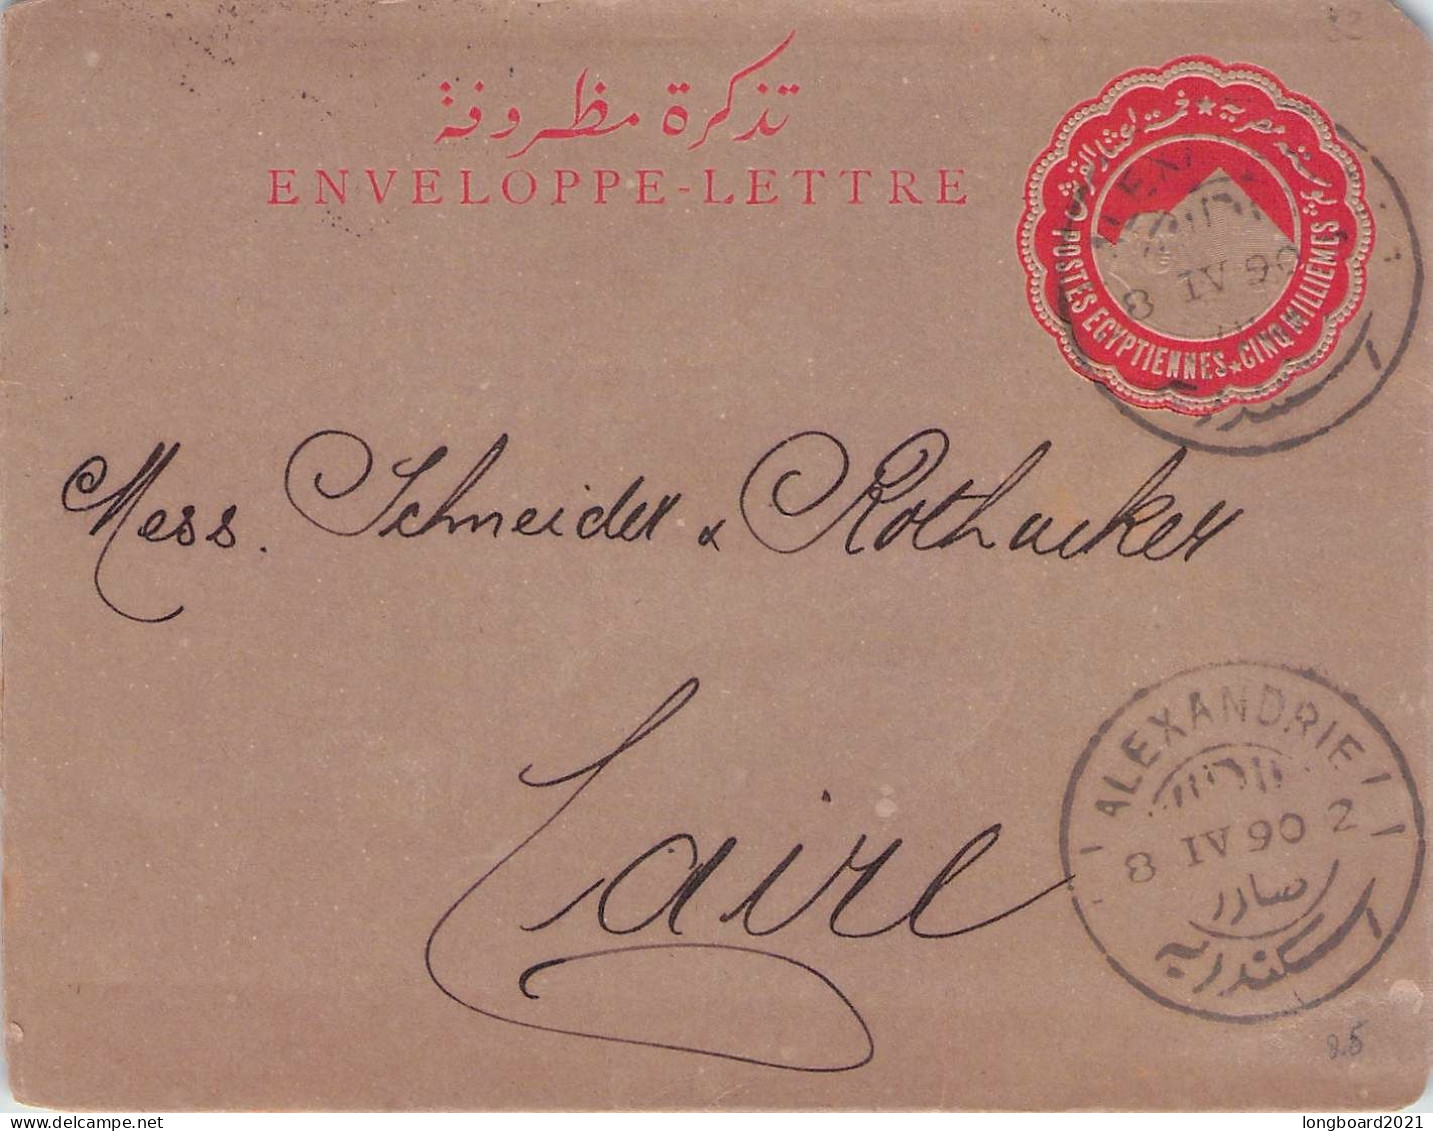 EGYPT - ENVELOPPE LETTRE CINQ MILL ALEXANDRIE - CAIRO 1890 / *255 - 1866-1914 Khedivate Of Egypt